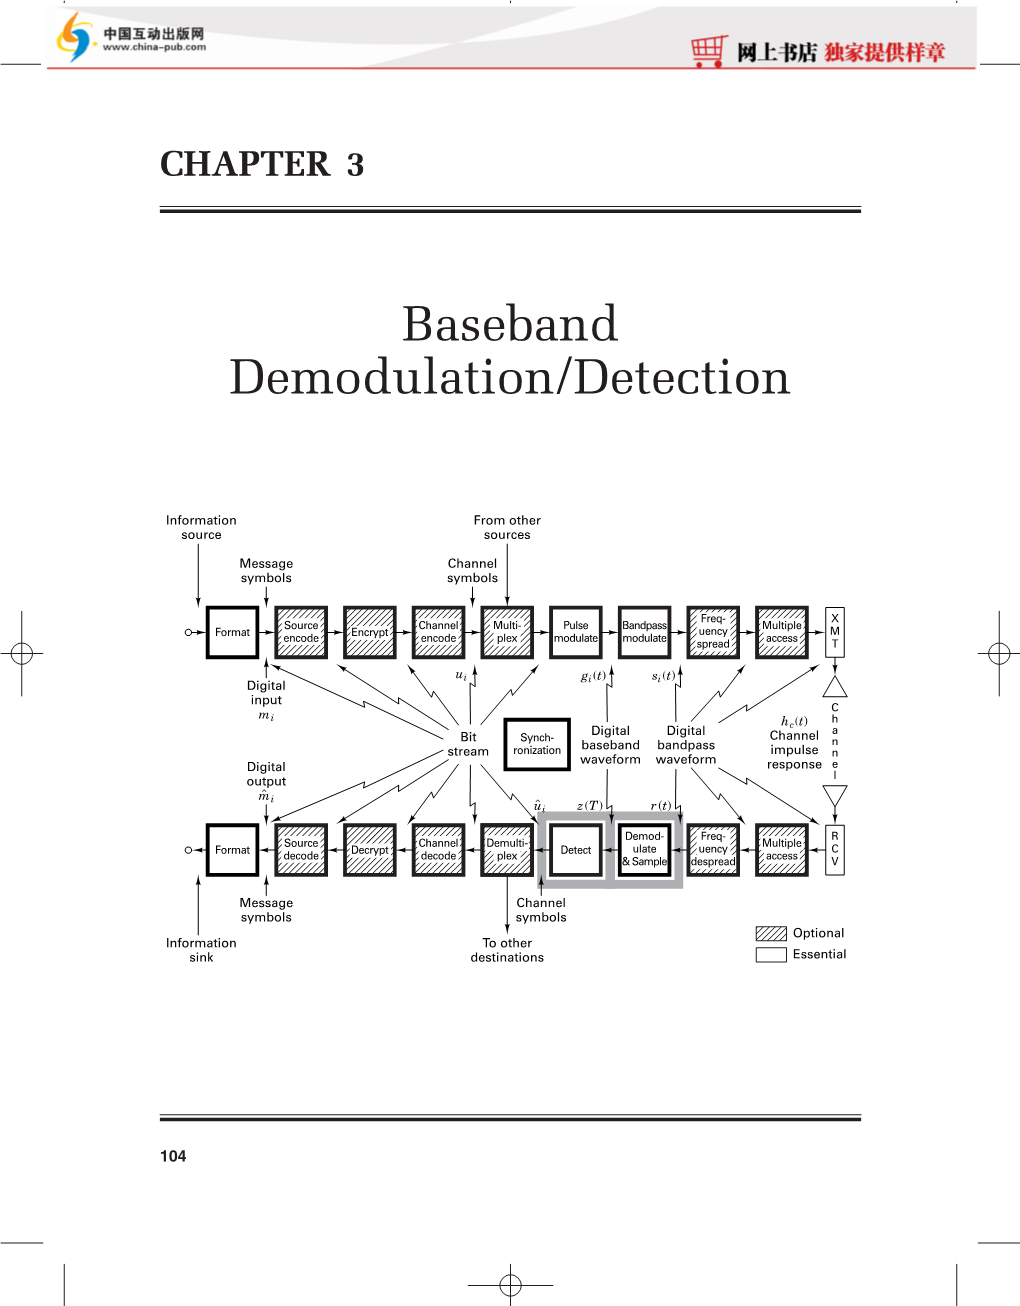 Baseband Demodulation/Detection